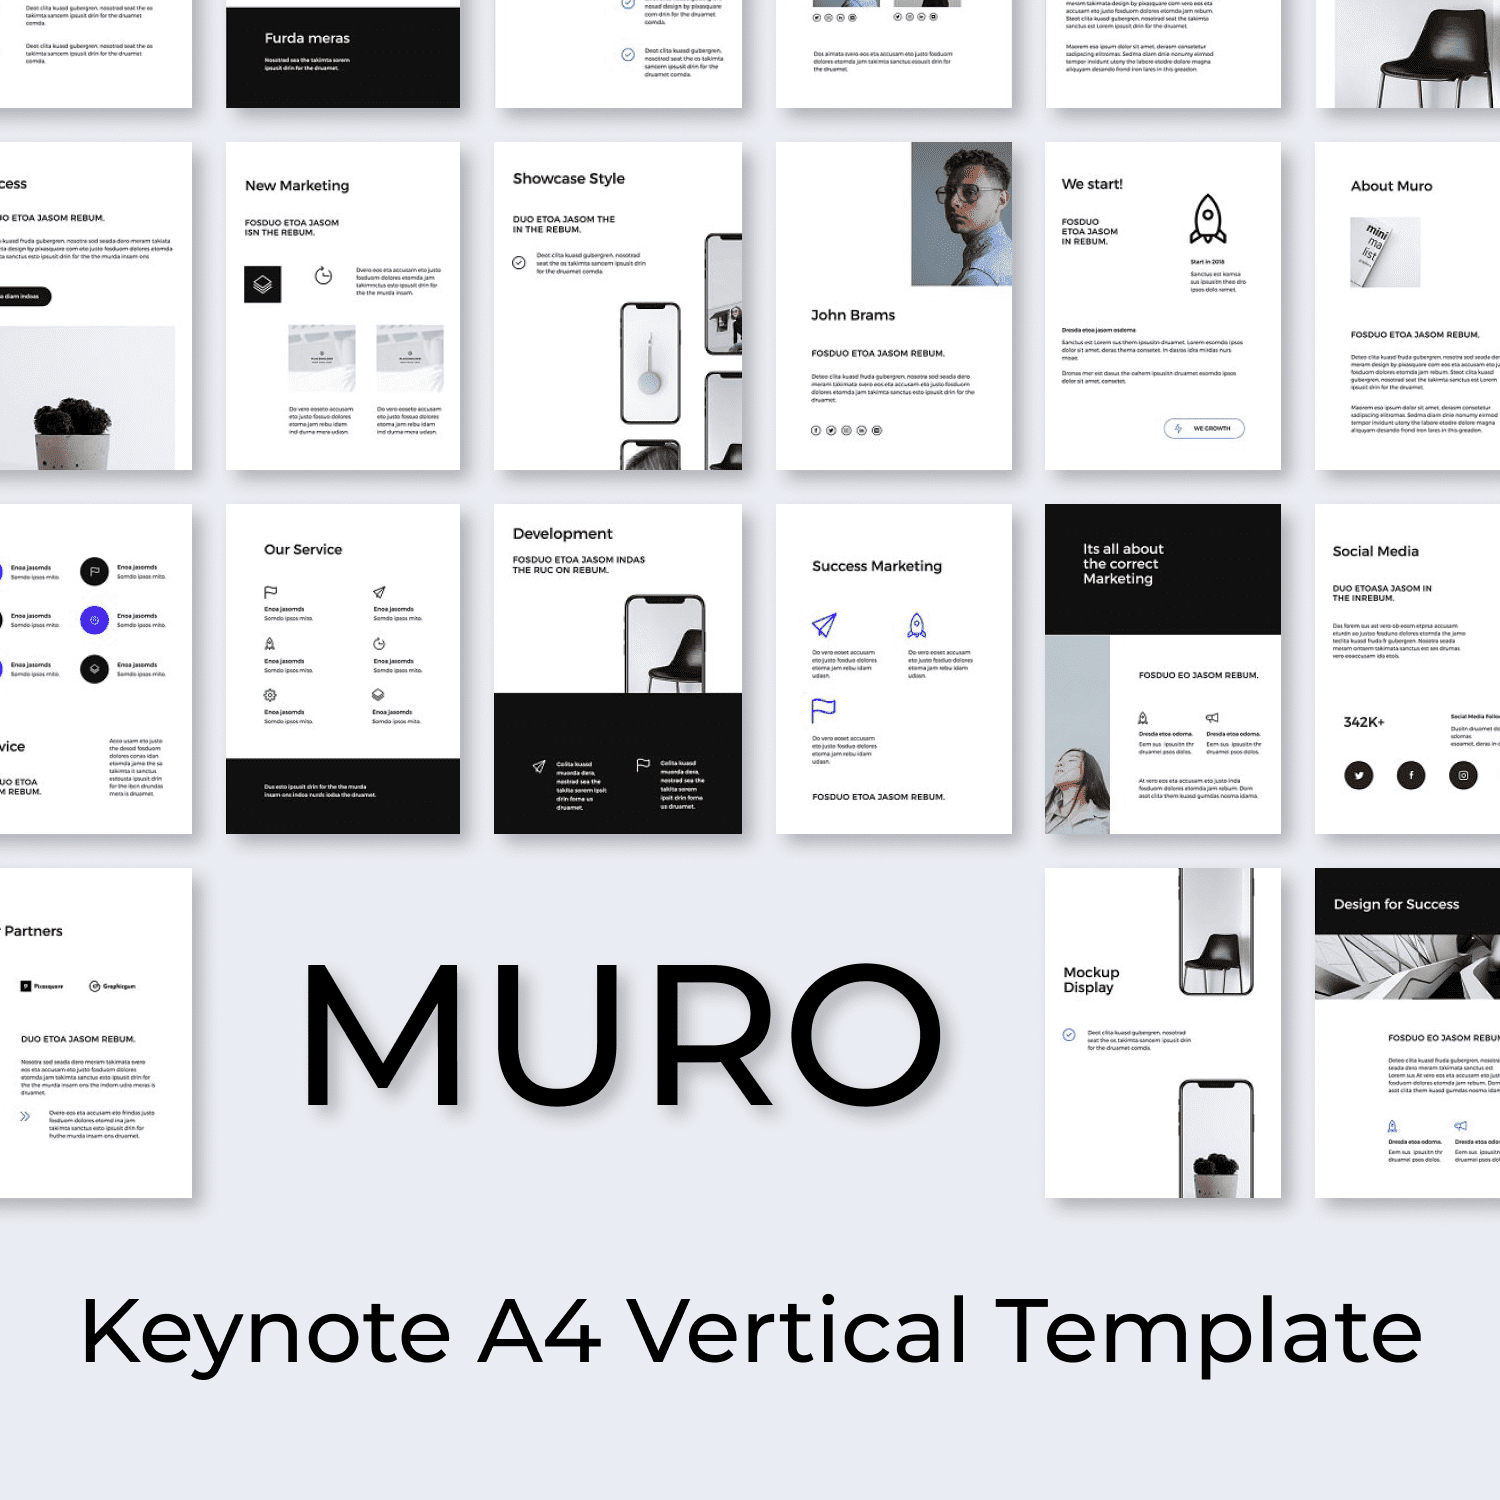 MURO Keynote A4 Vertical Template main cover.